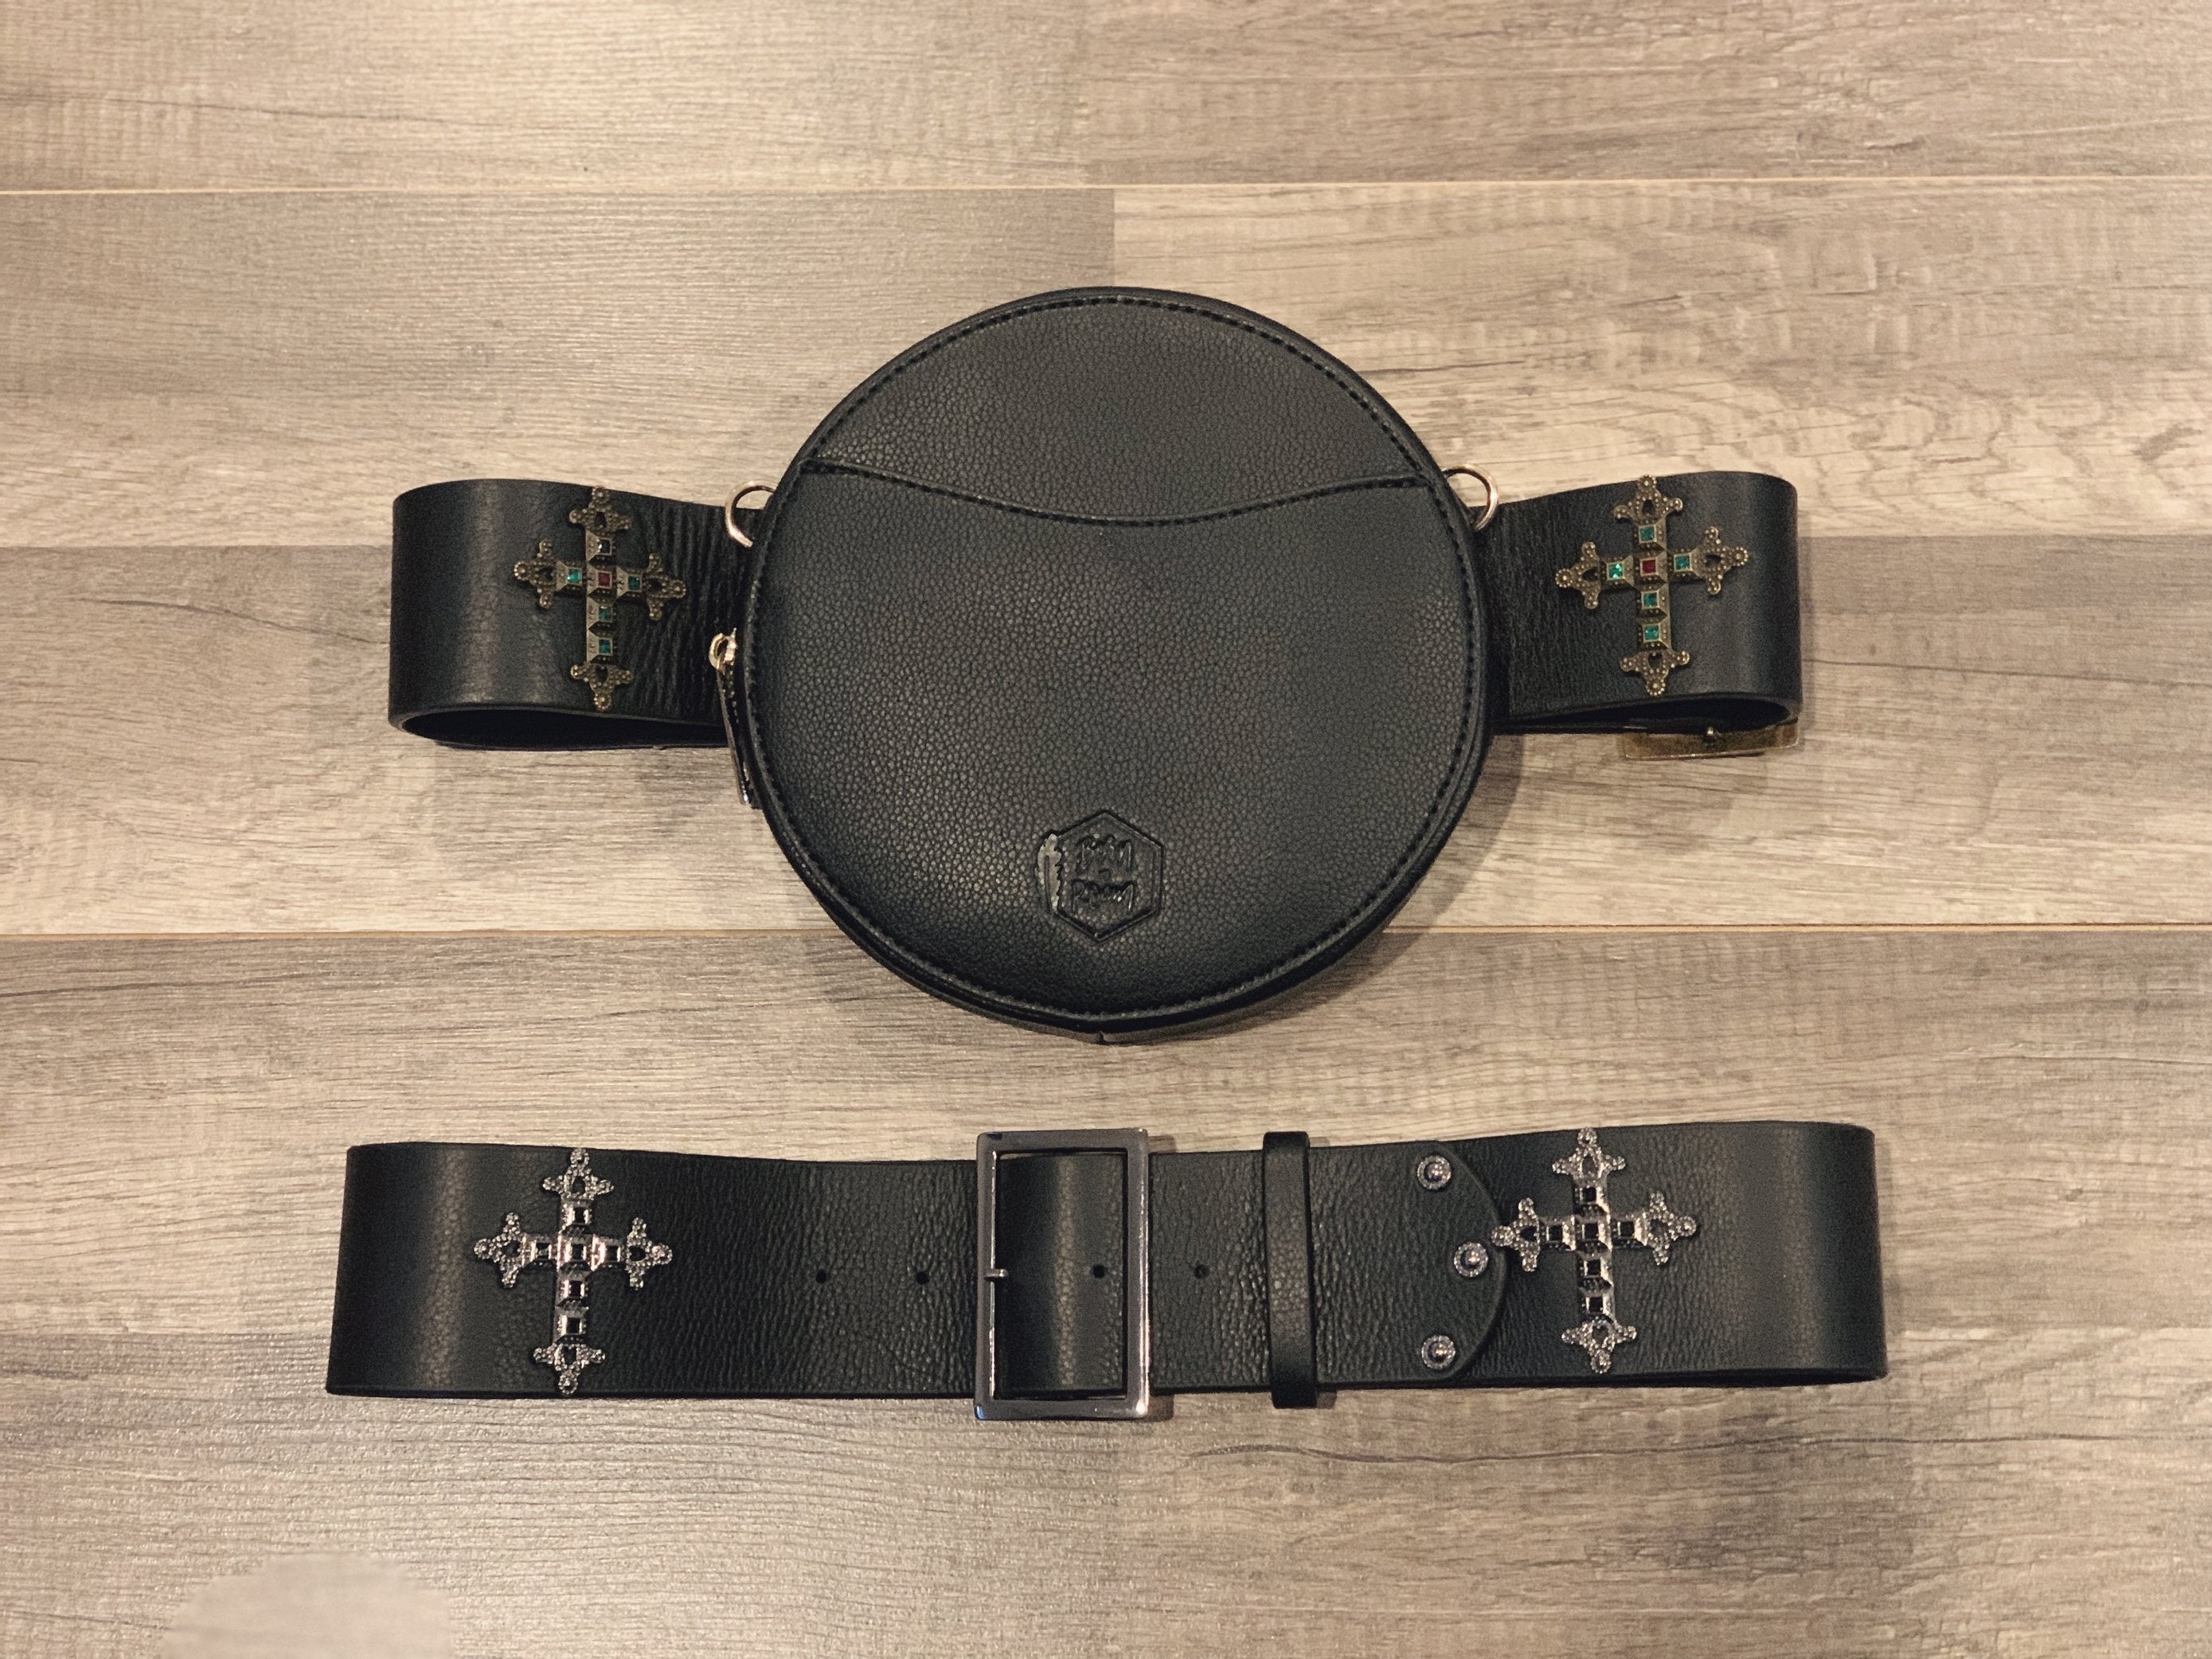 Stylish black leather pouch for crossbody wear